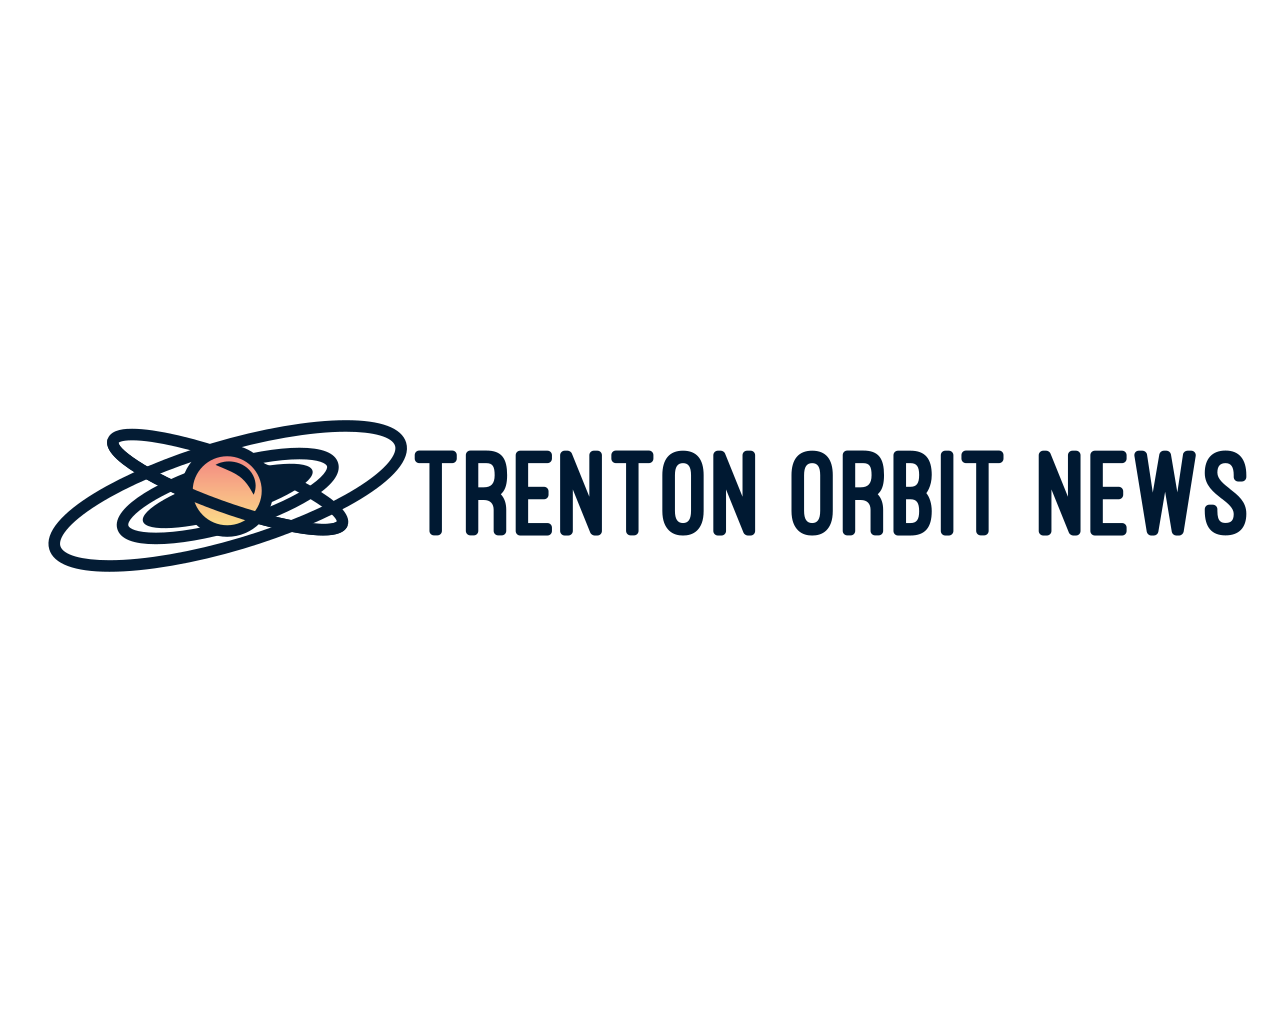 Trenton Orbit